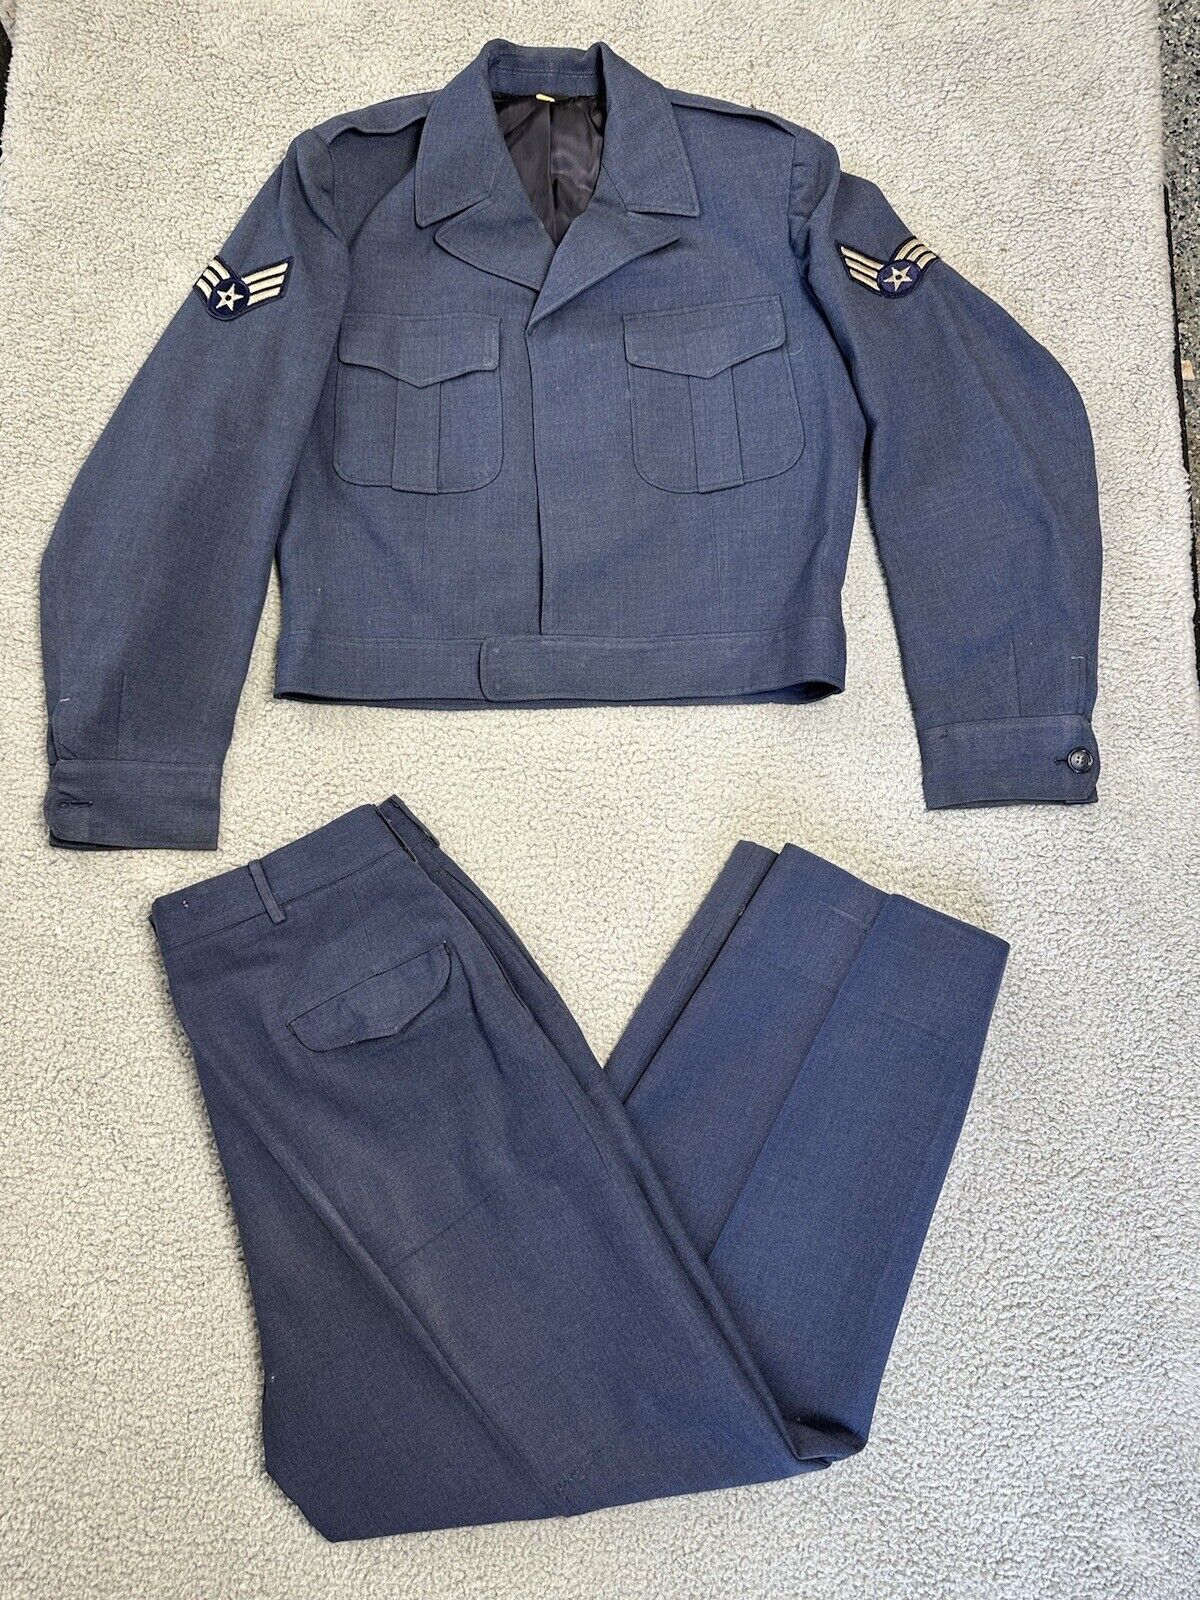 vintage 40s WWII airforce uniform wool ike jacket mens 42xl blue USA